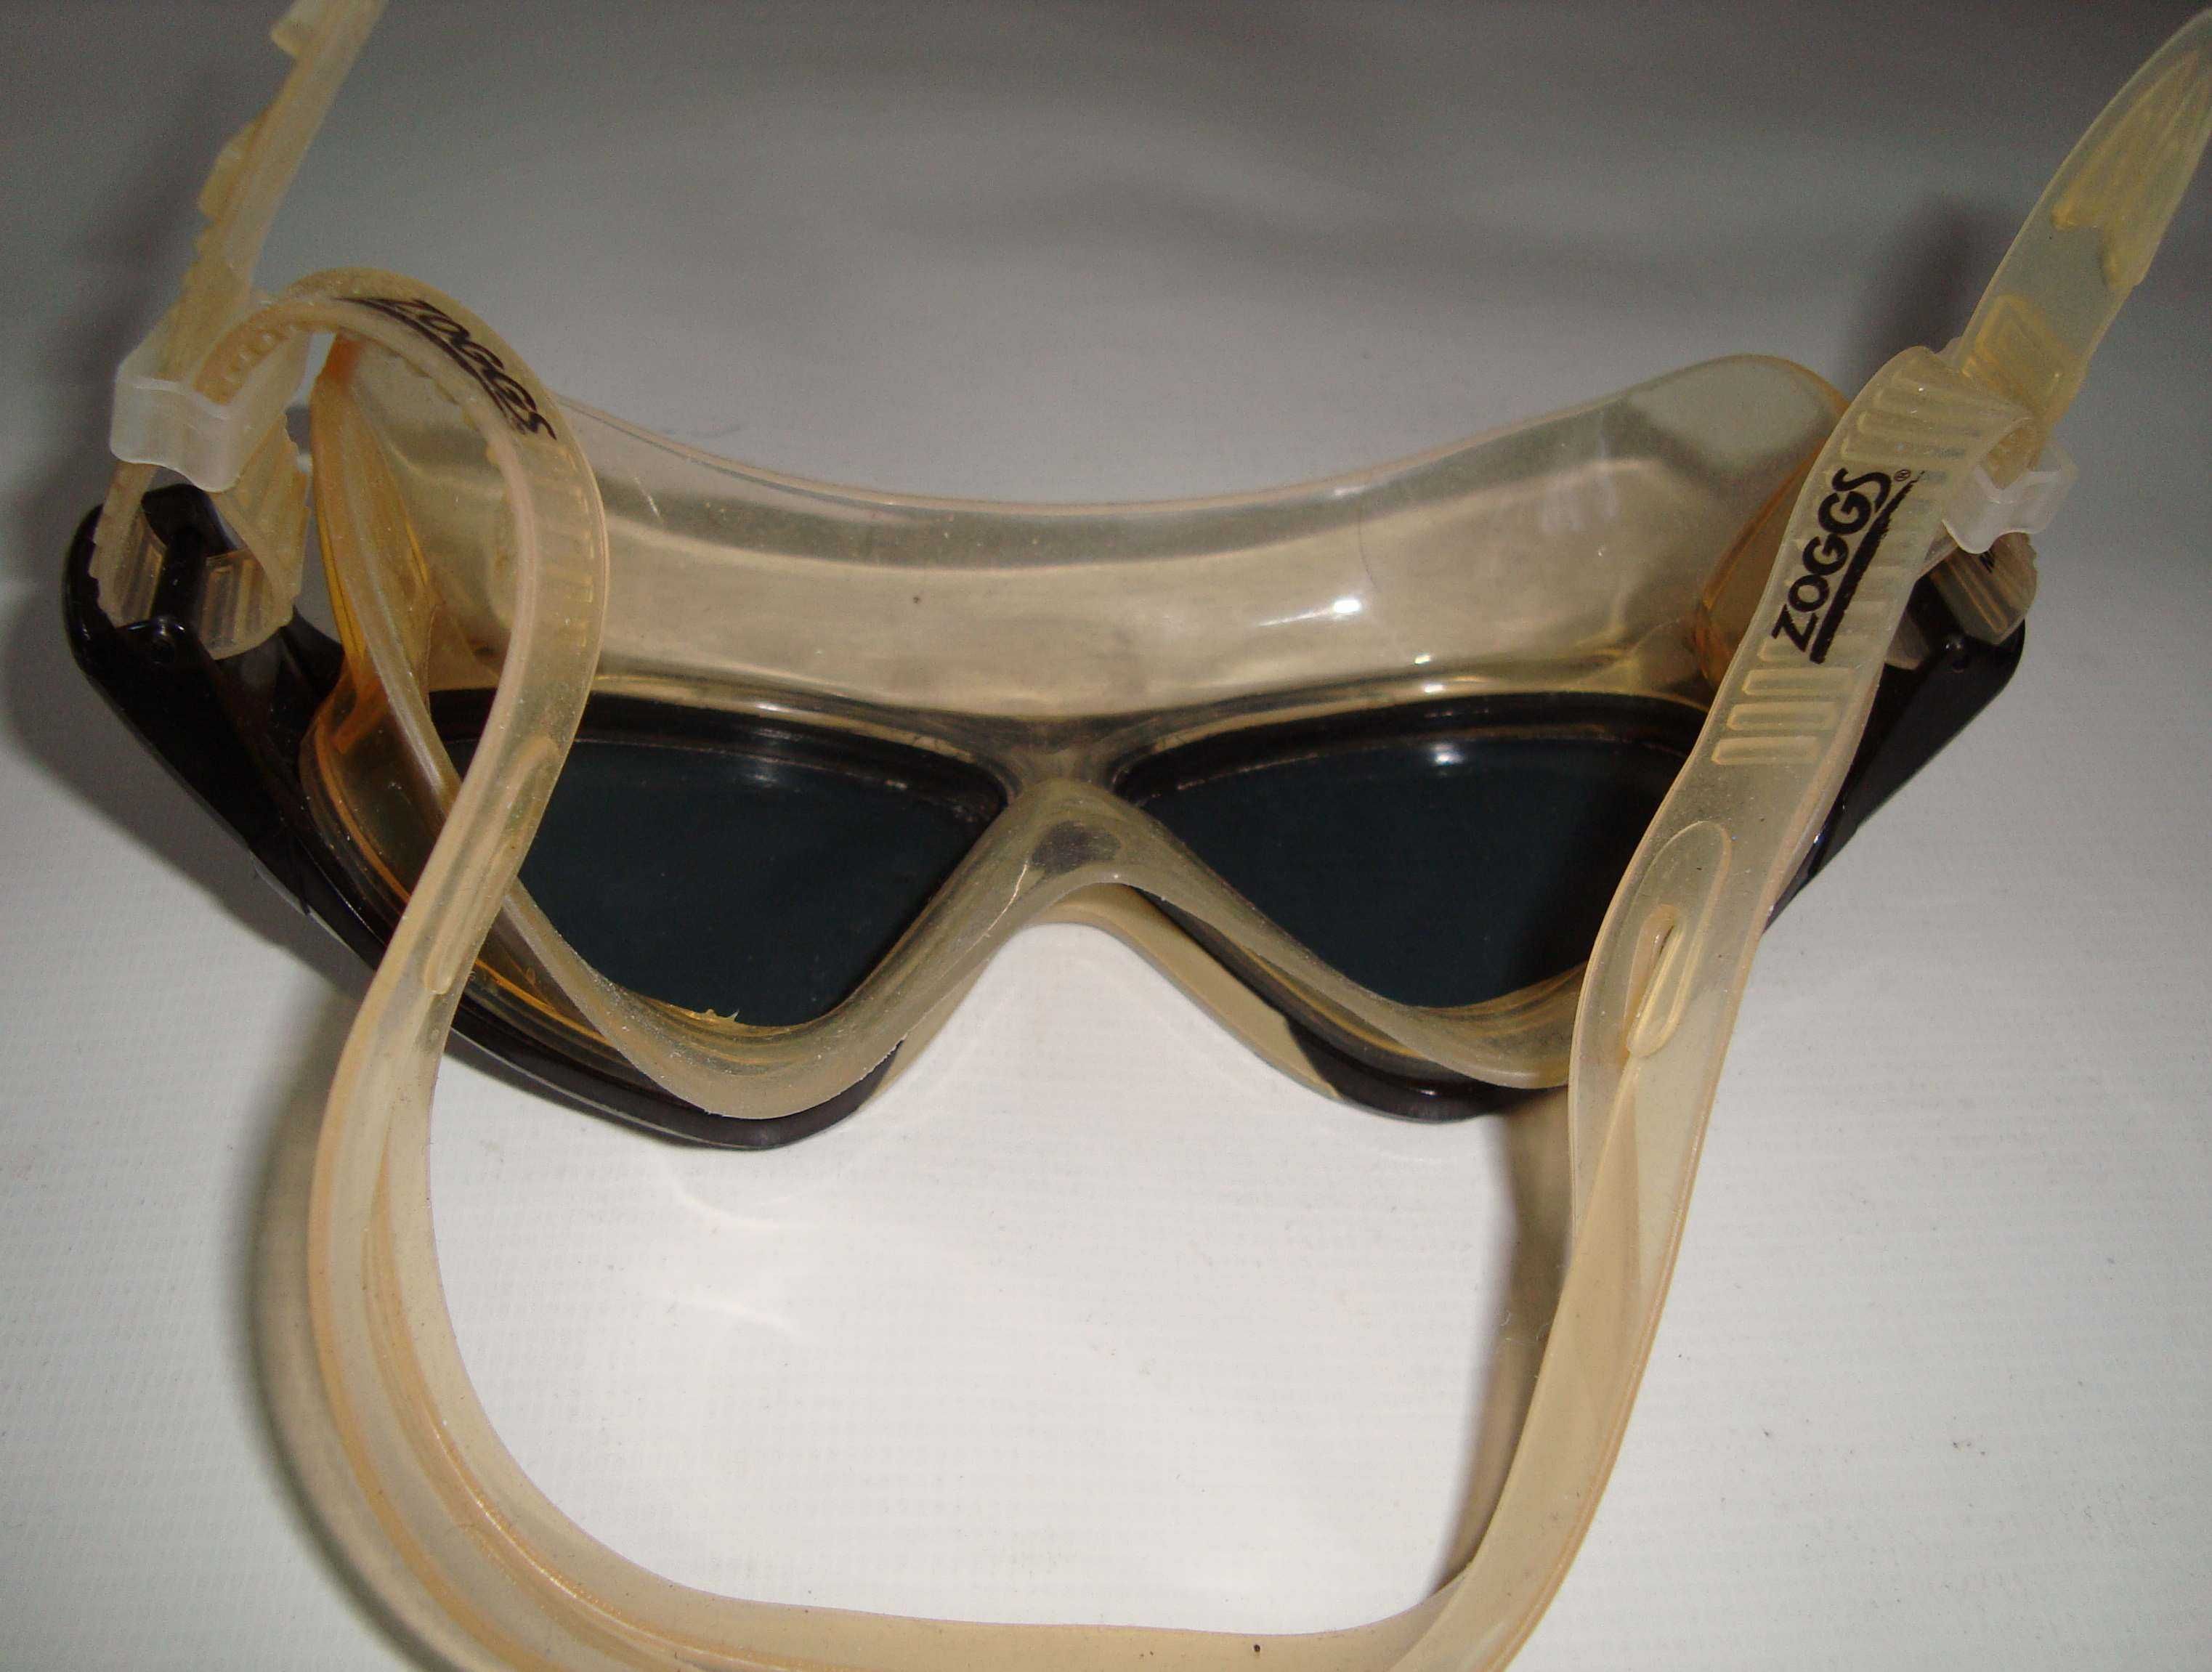 Очки для плавания Zoggs Tri-Vision Mask (чёрный) обмин на инше з плав